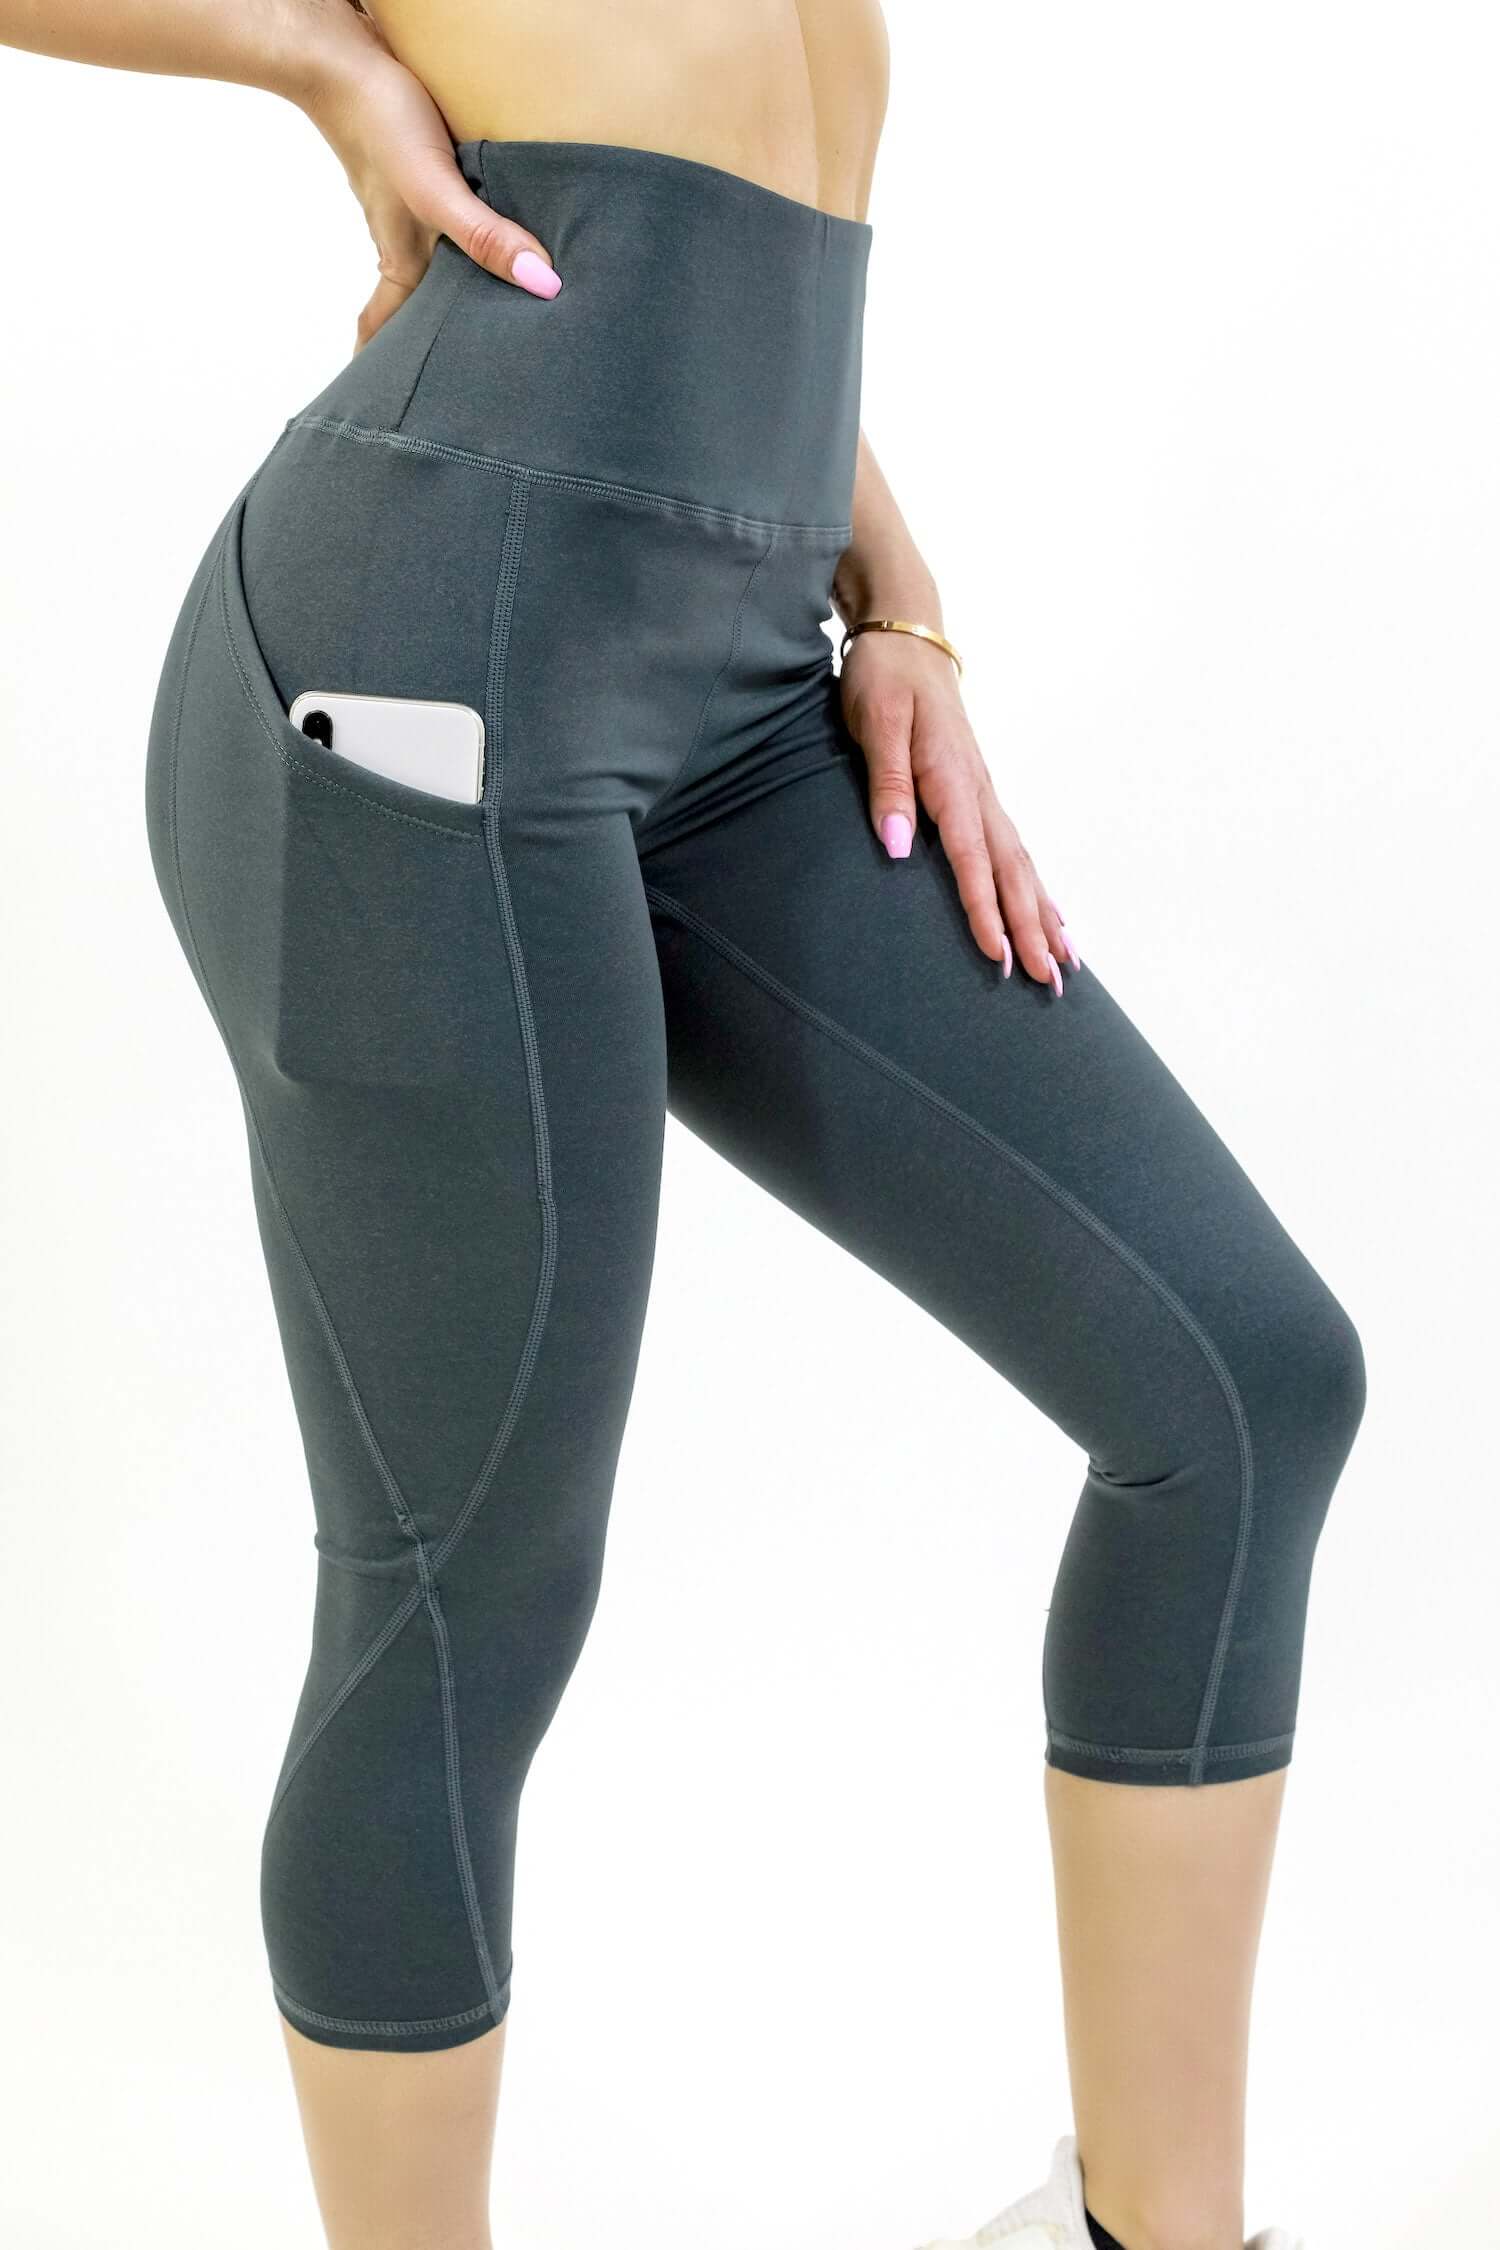 Women's Capri Yoga Pants Leggings With Pockets High Waist GYM